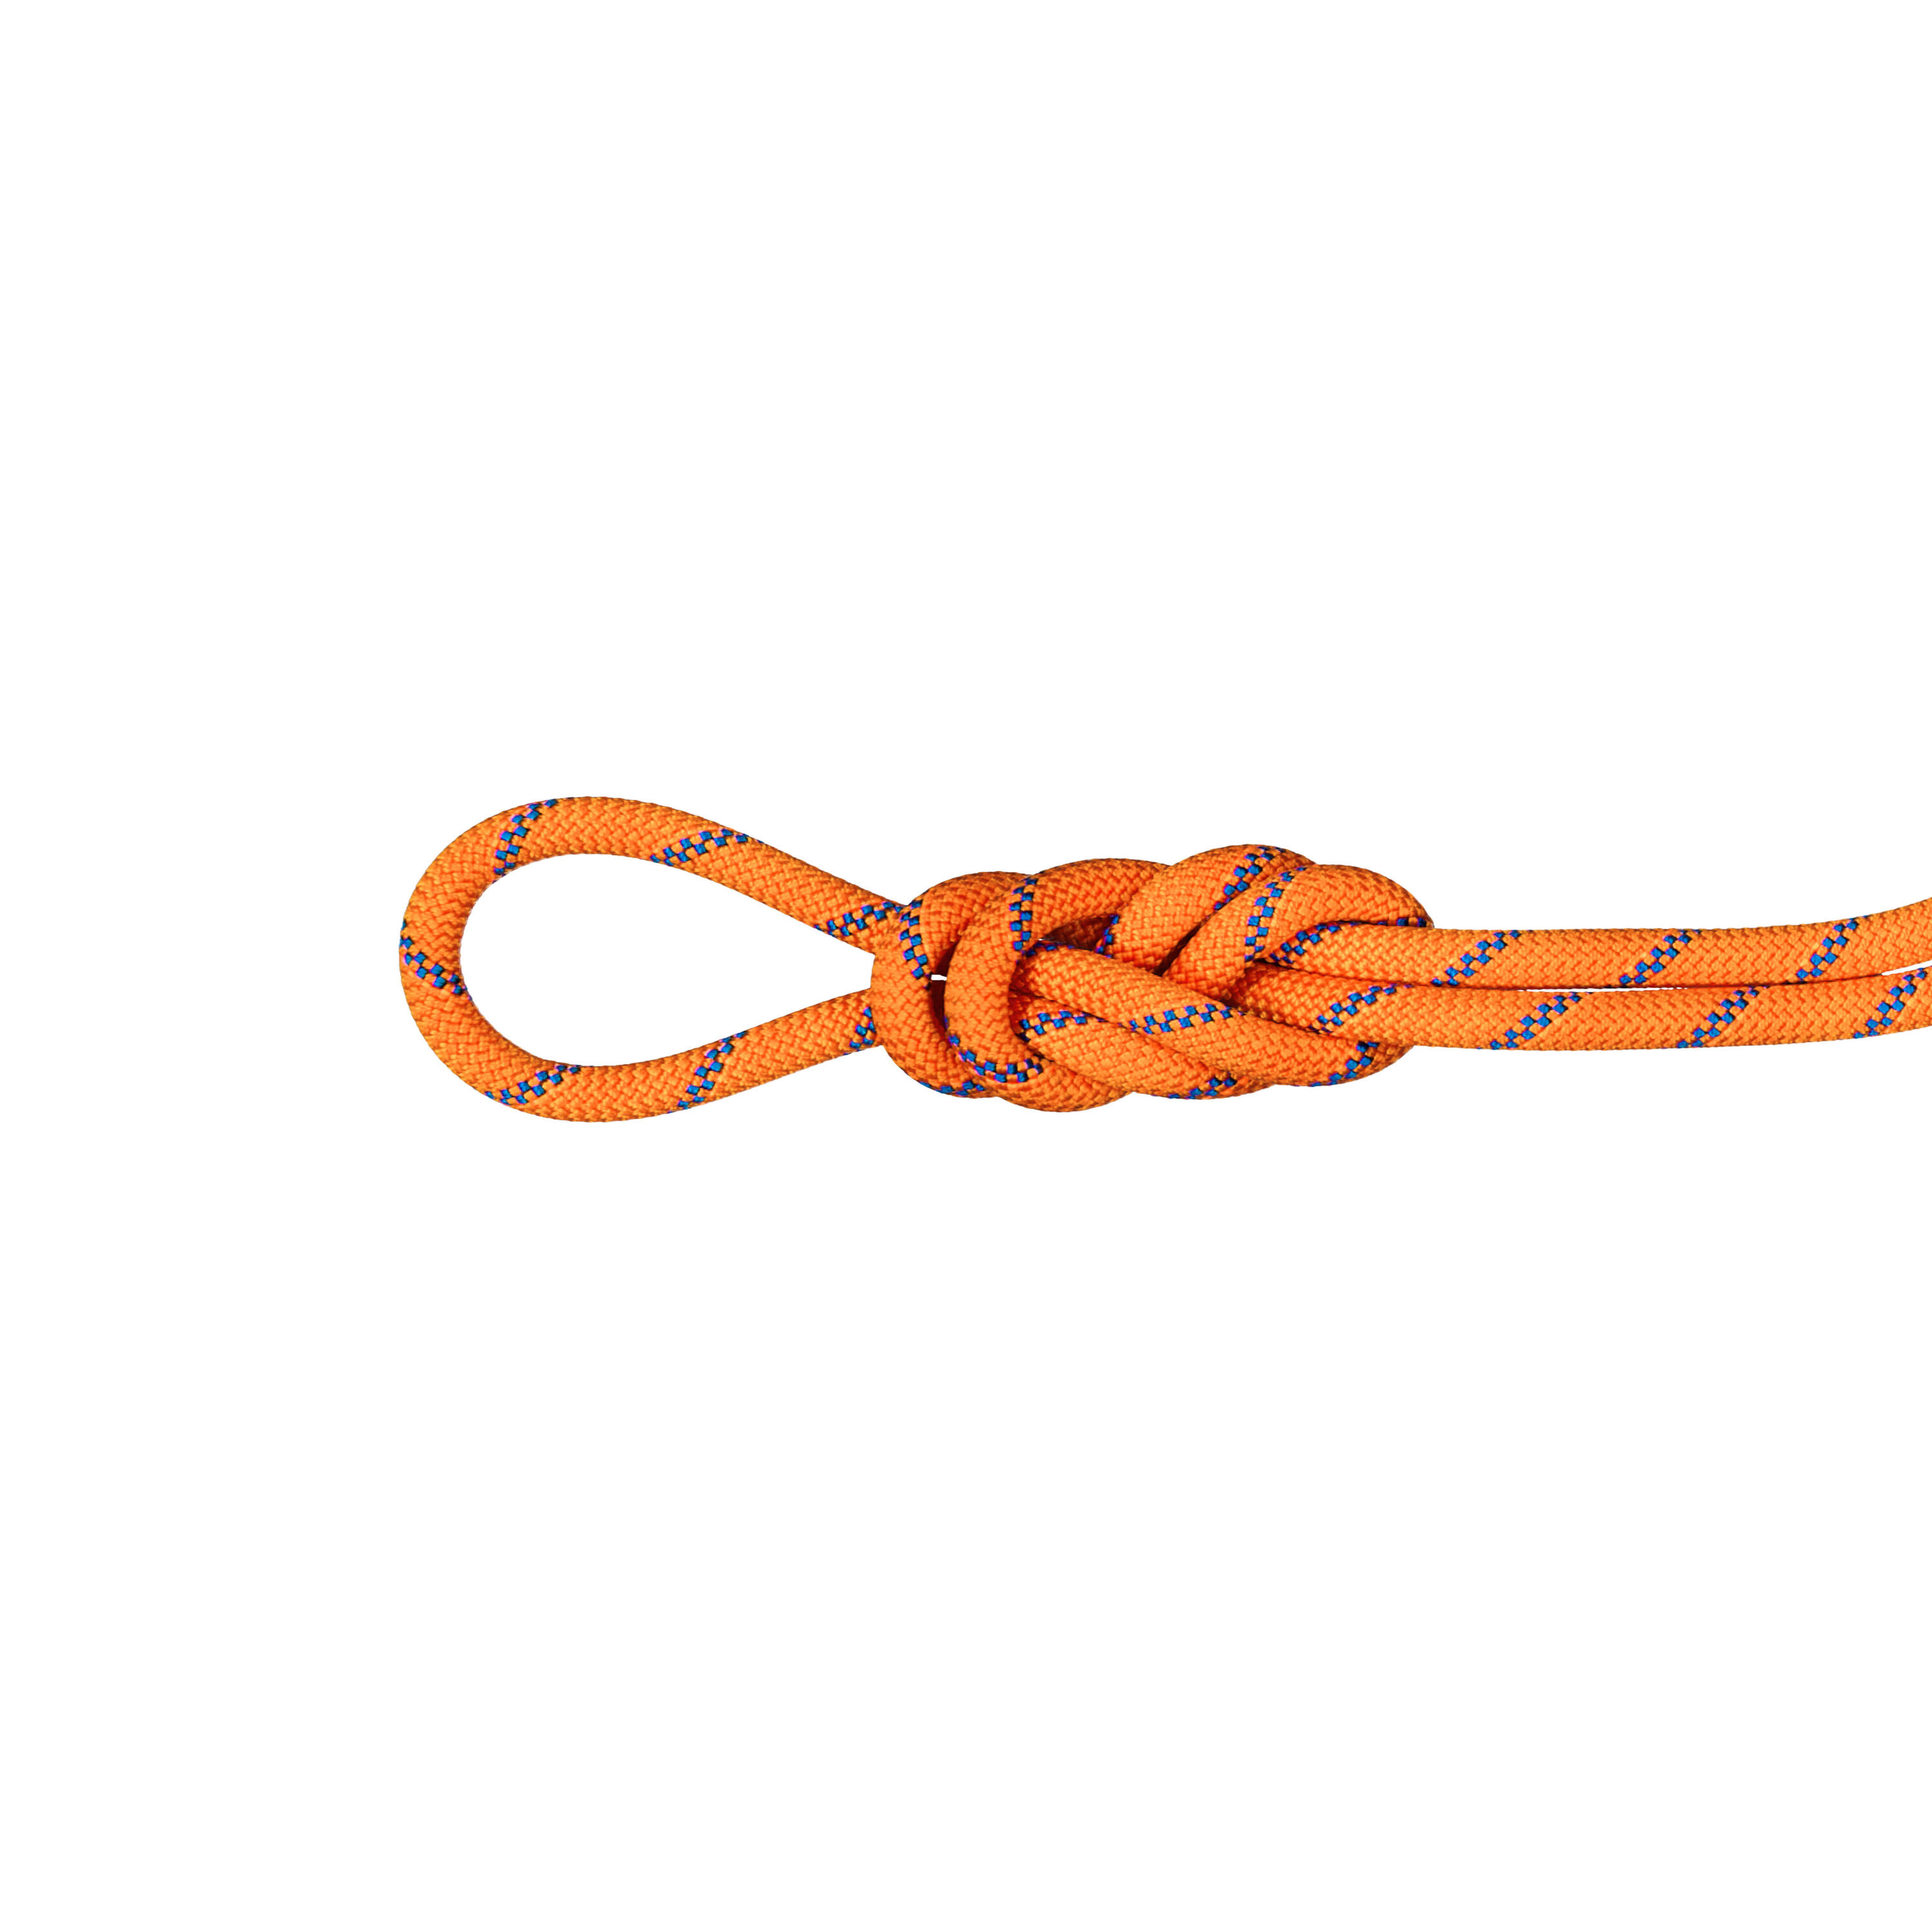 MAMMUT Alpine Sender Dry Triple-Rated Rope 9.0 mm x 50m - Orange